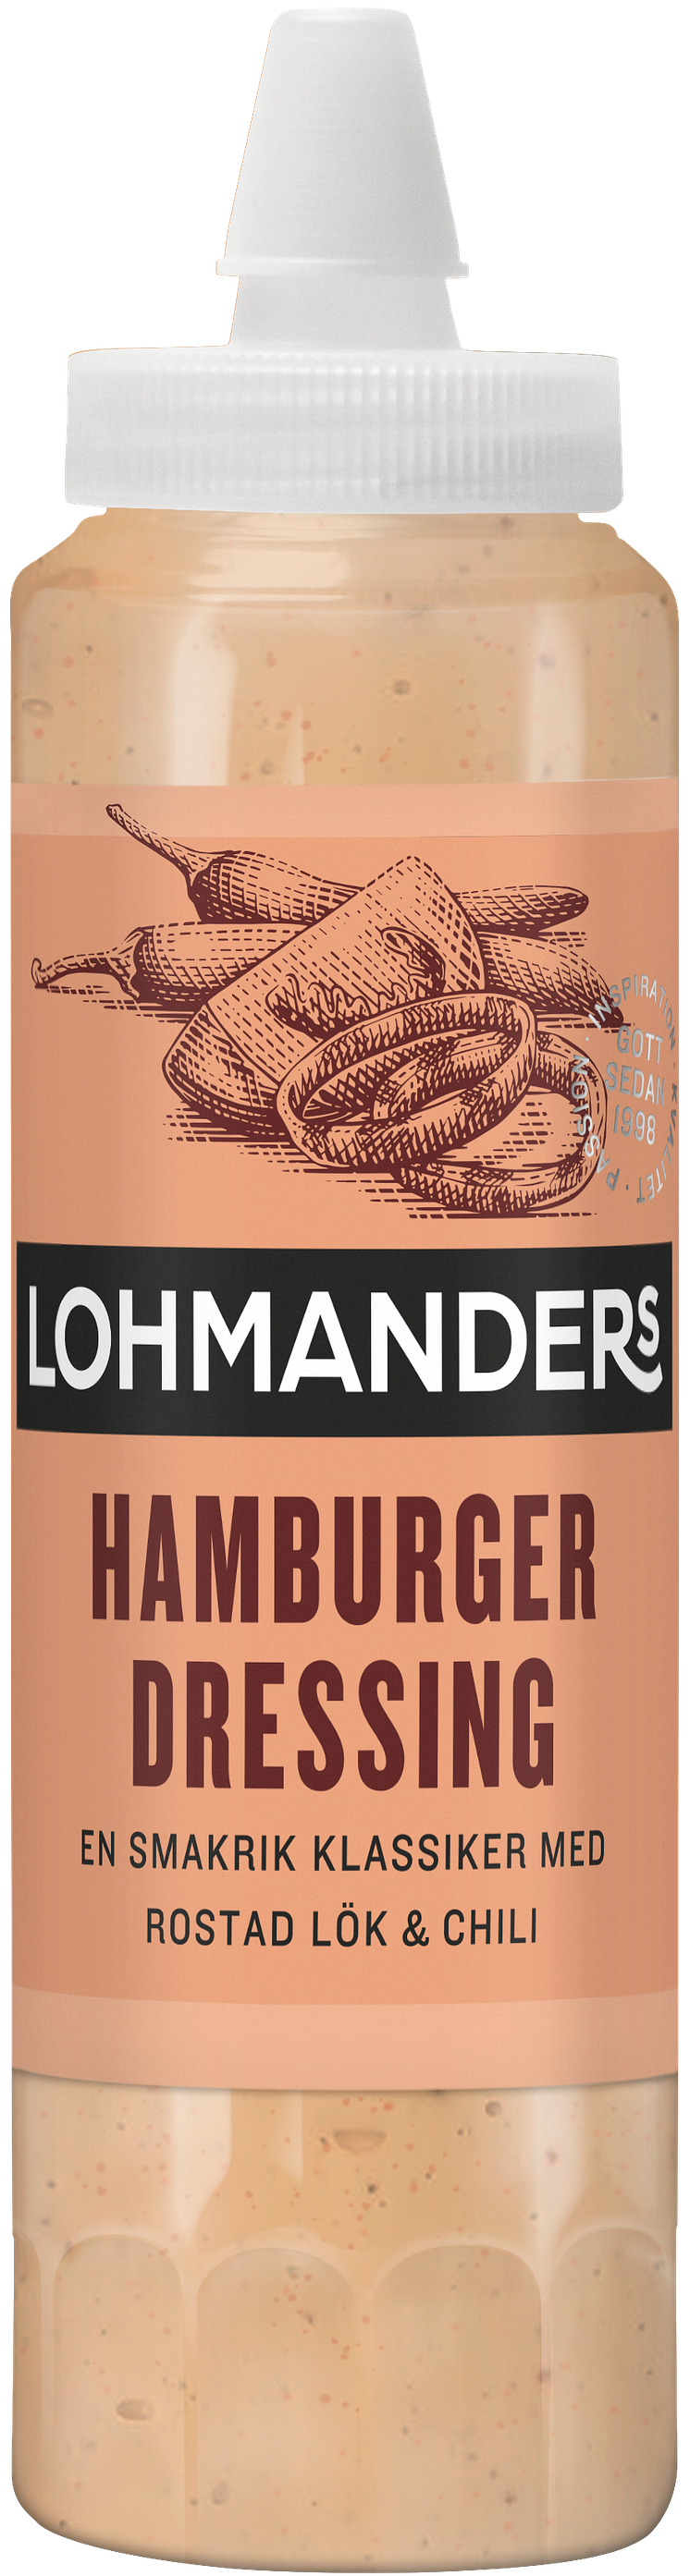 149914 621023 Lohmanders Hamburgerdressing 250ml FRONT R3